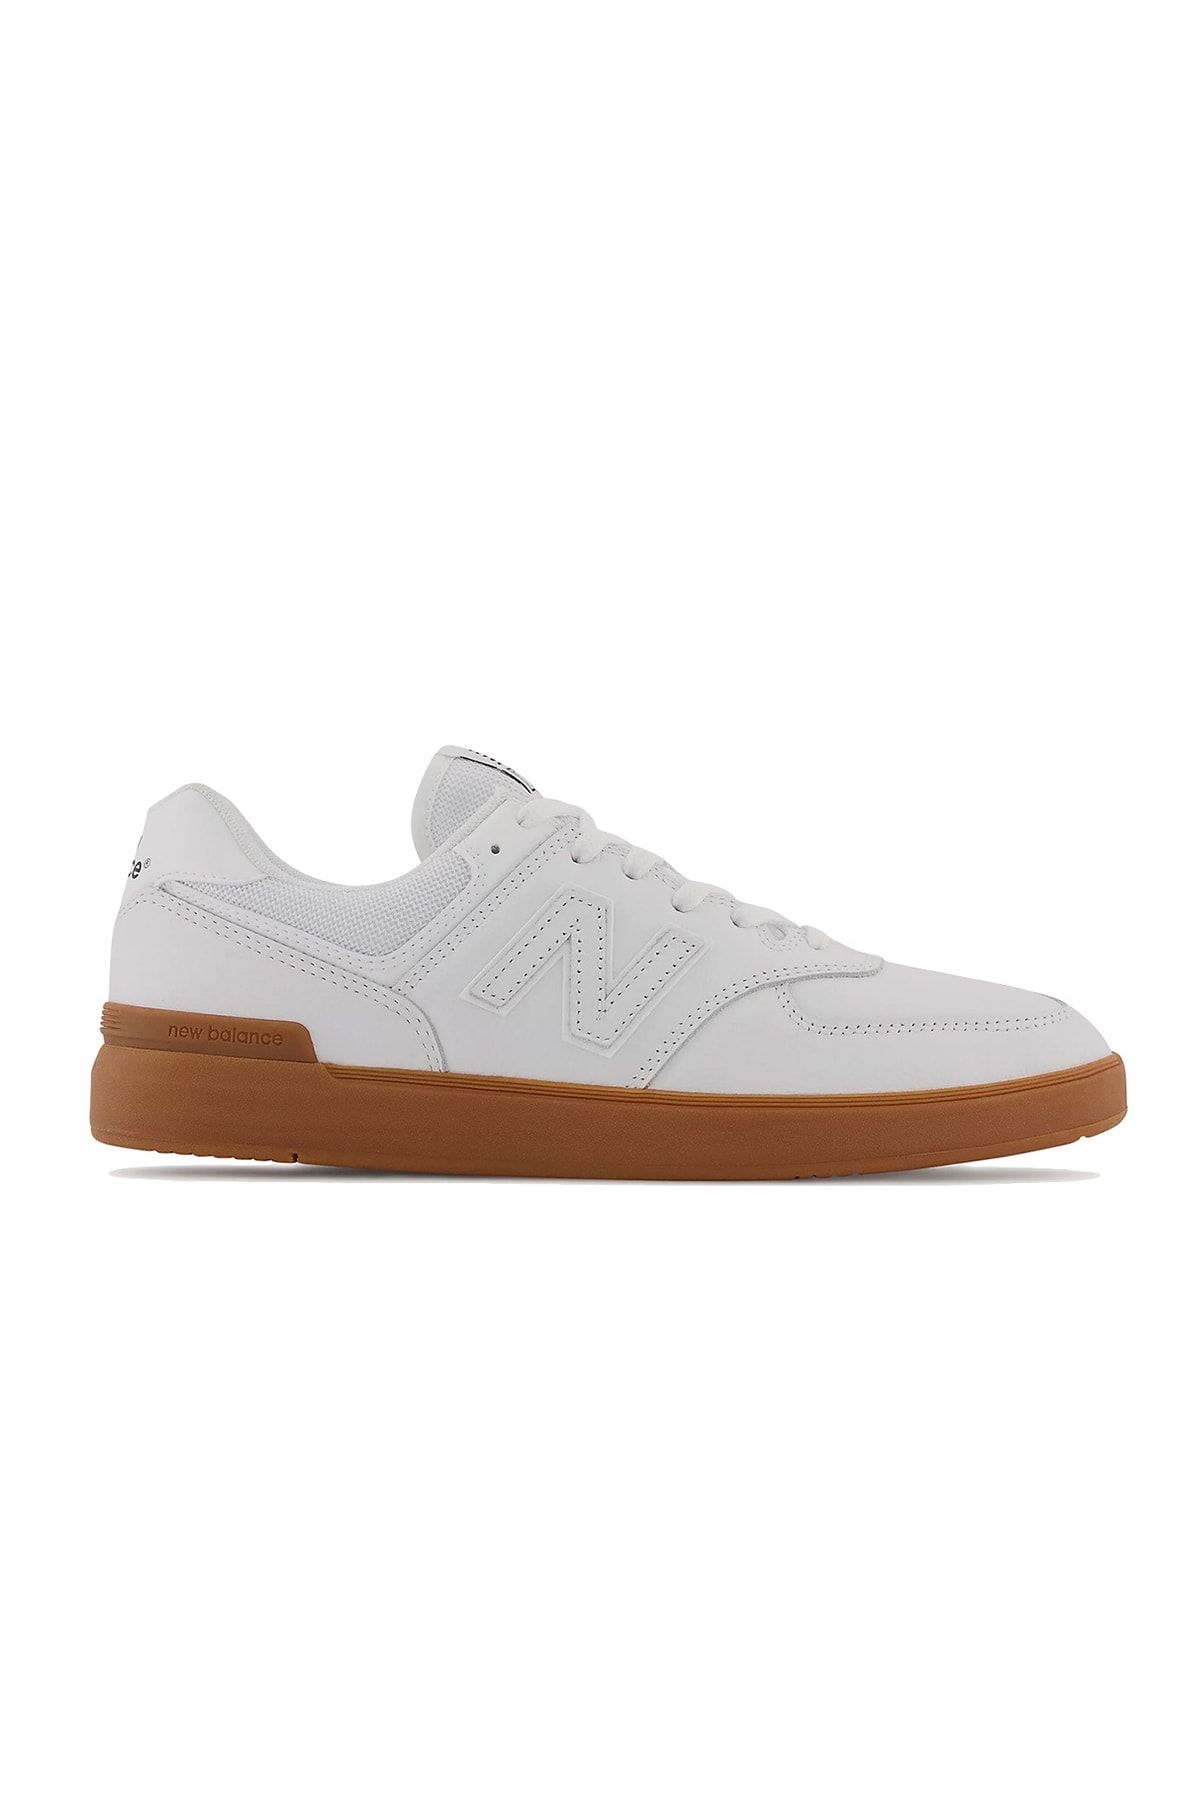 New Balance Sneakers - White - Flat - Trendyol